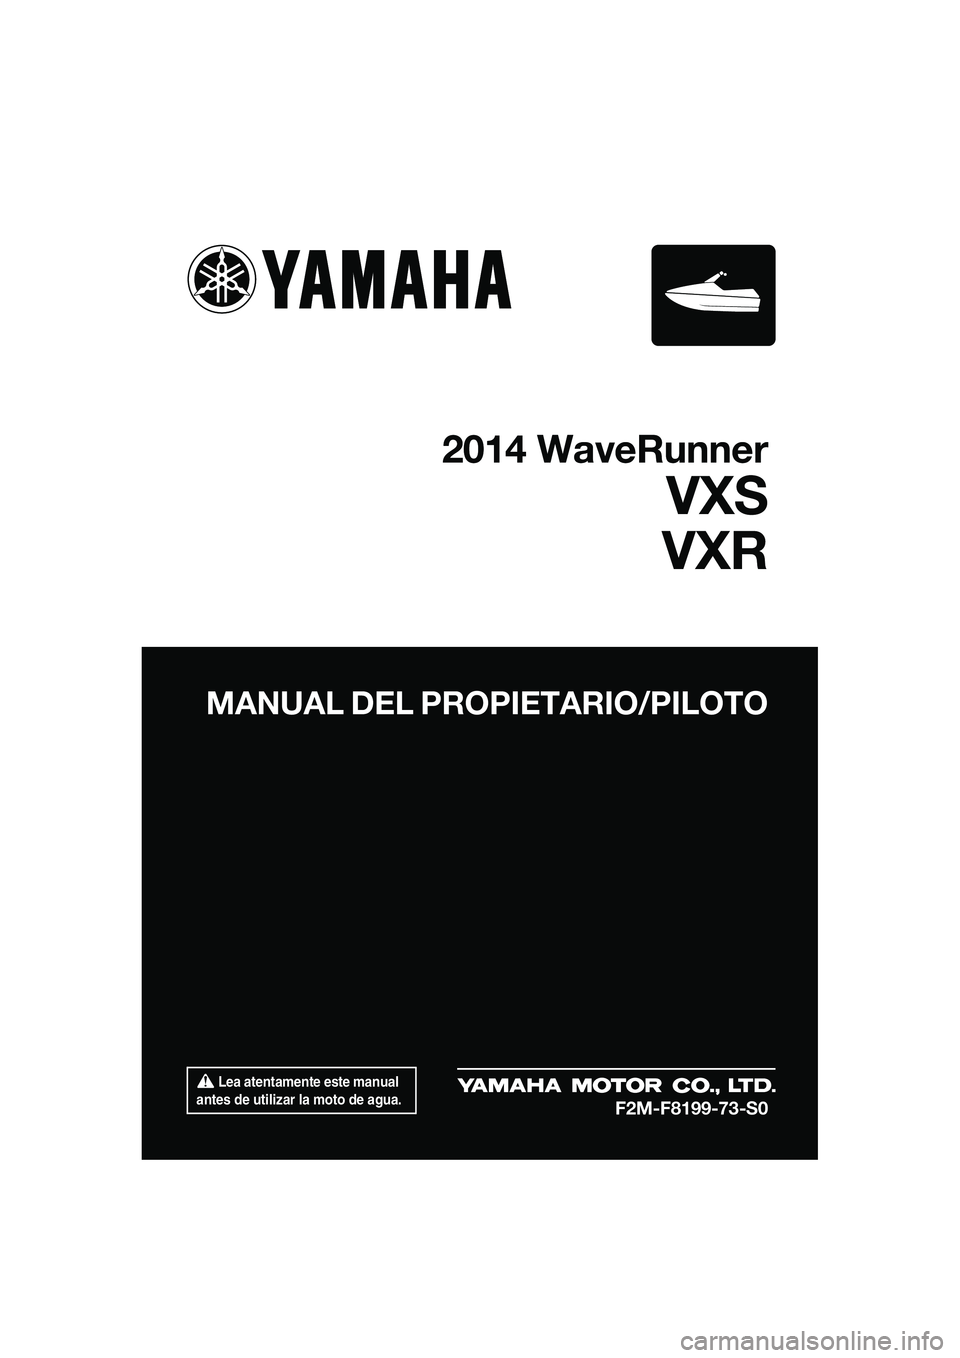 YAMAHA VXS 2014  Manuale de Empleo (in Spanish)  Lea atentamente este manual 
antes de utilizar la moto de agua.
MANUAL DEL PROPIETARIO/PILOTO
2014 WaveRunner
VXS
VXR
F2M-F8199-73-S0
UF2M73S0.book  Page 1  Friday, August 2, 2013  11:33 AM 